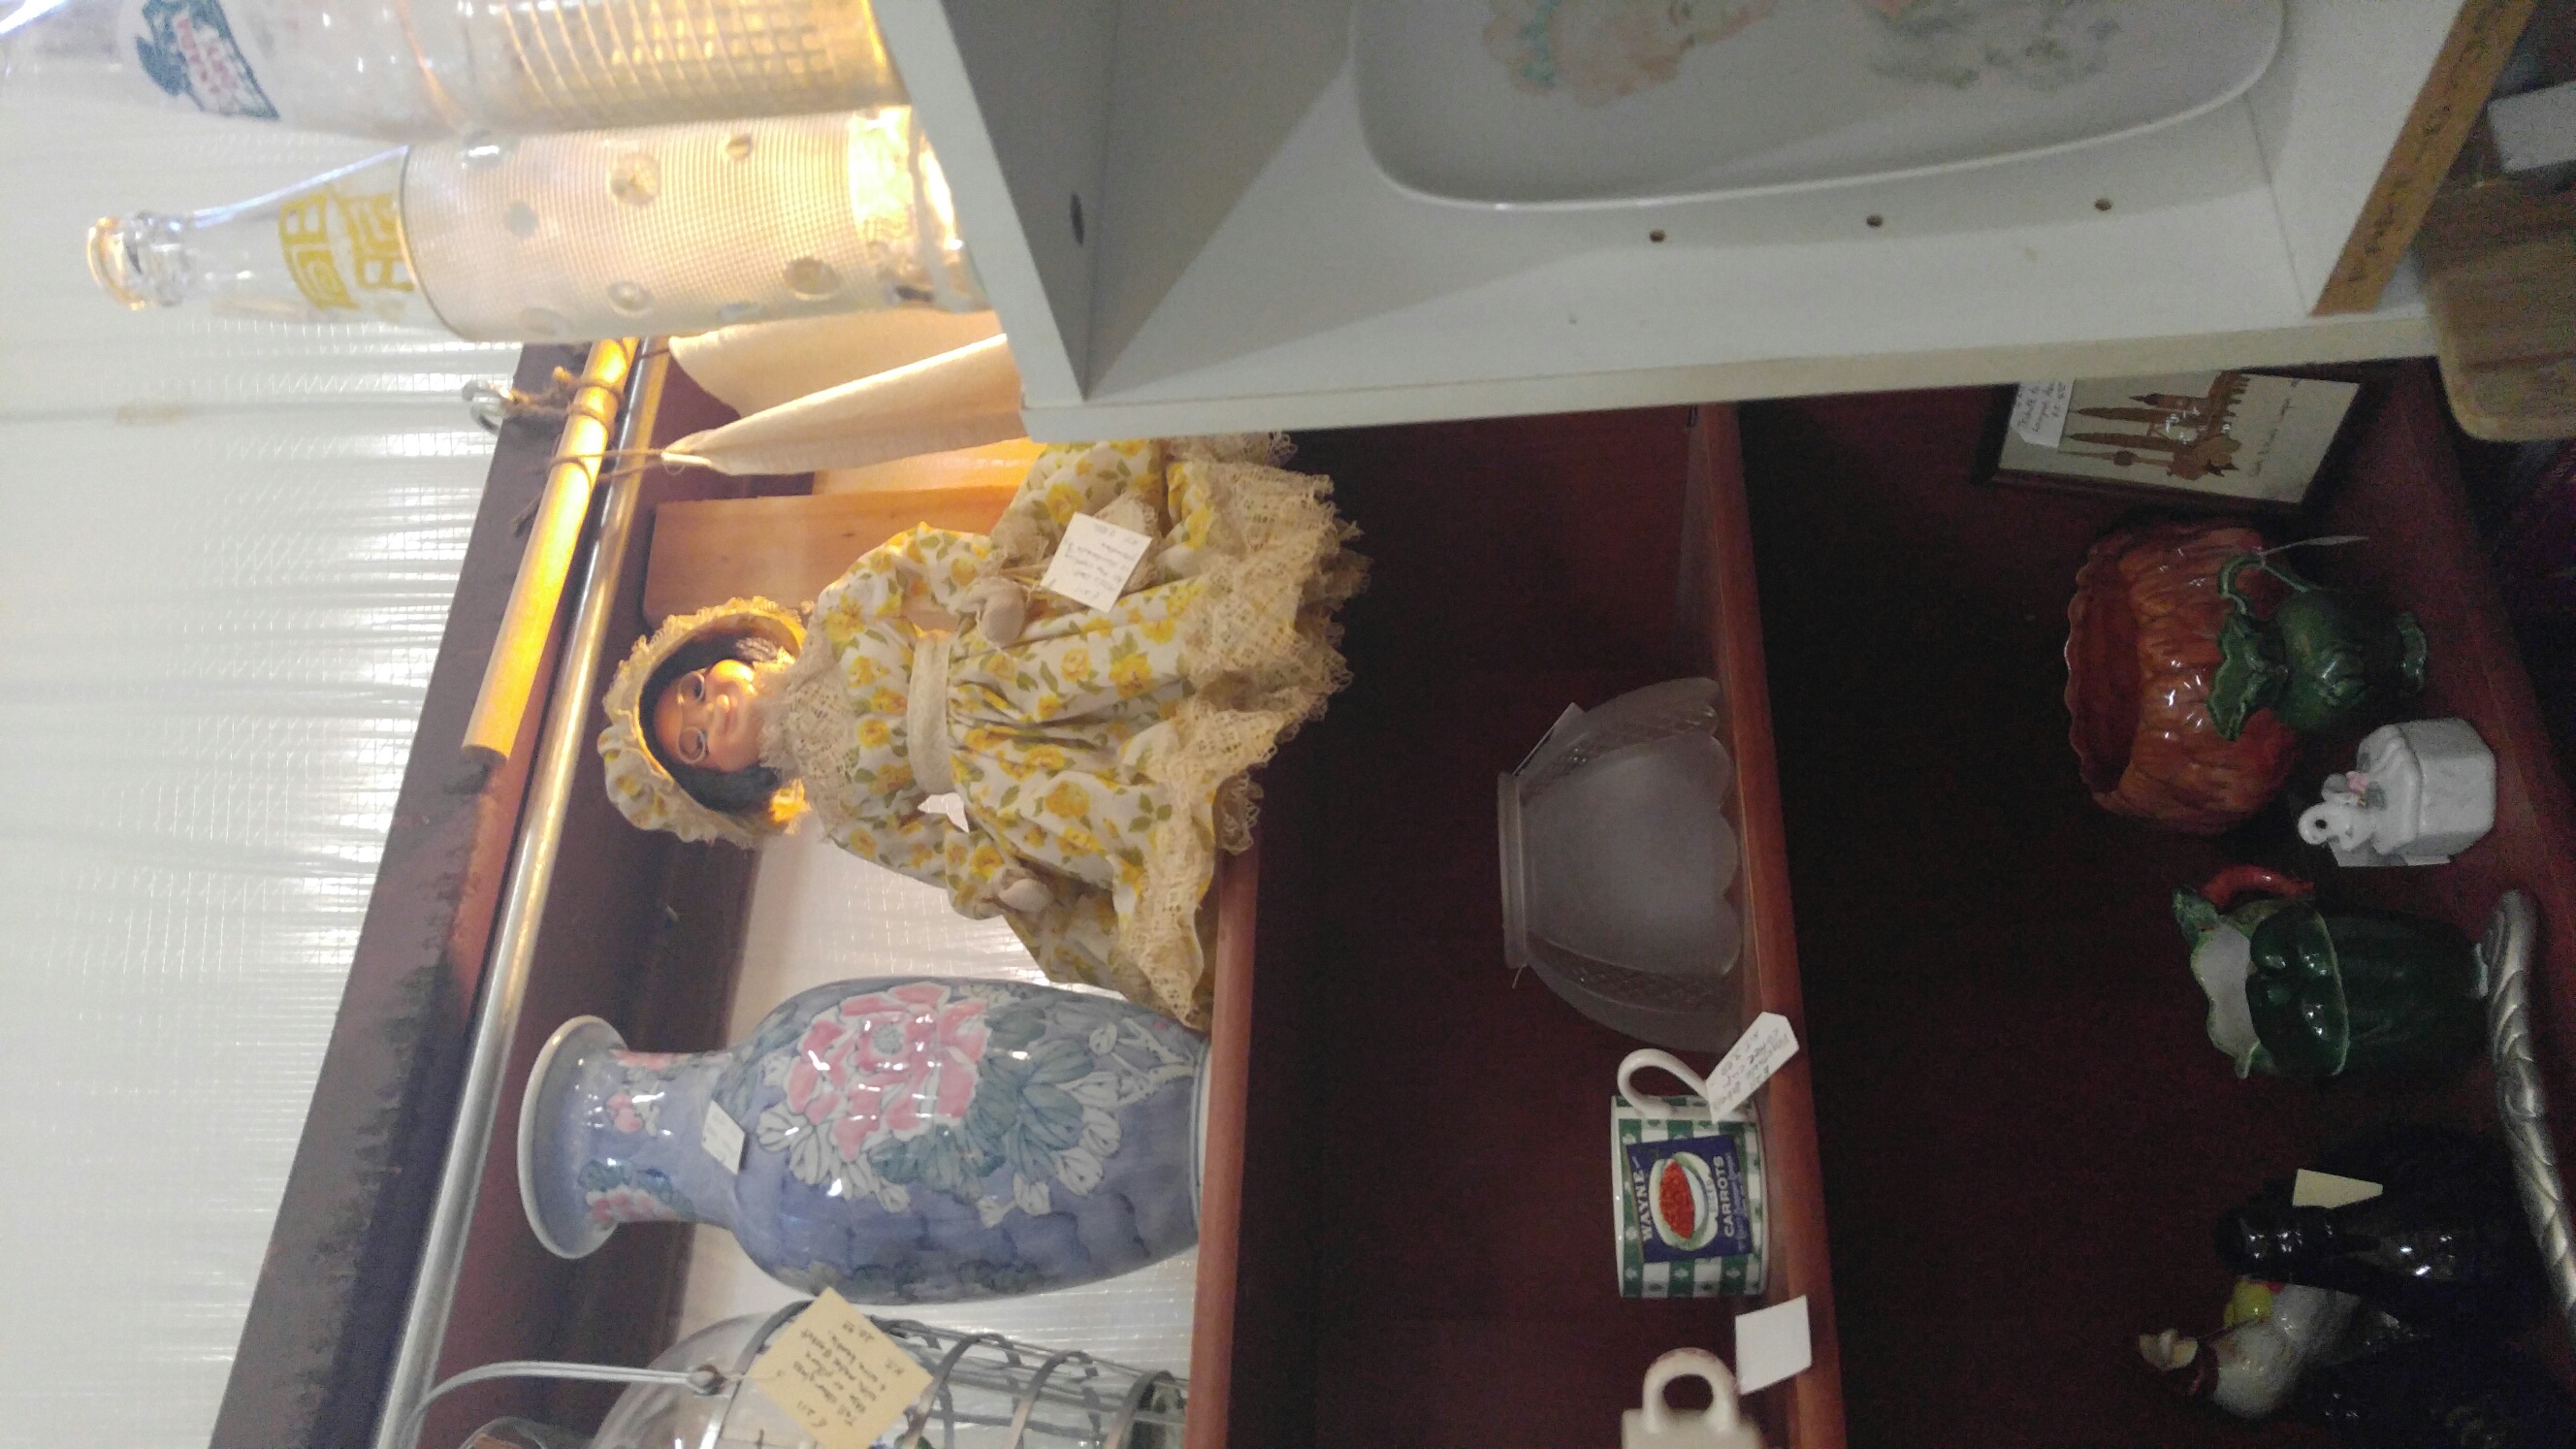 scary shelf doll.jpg